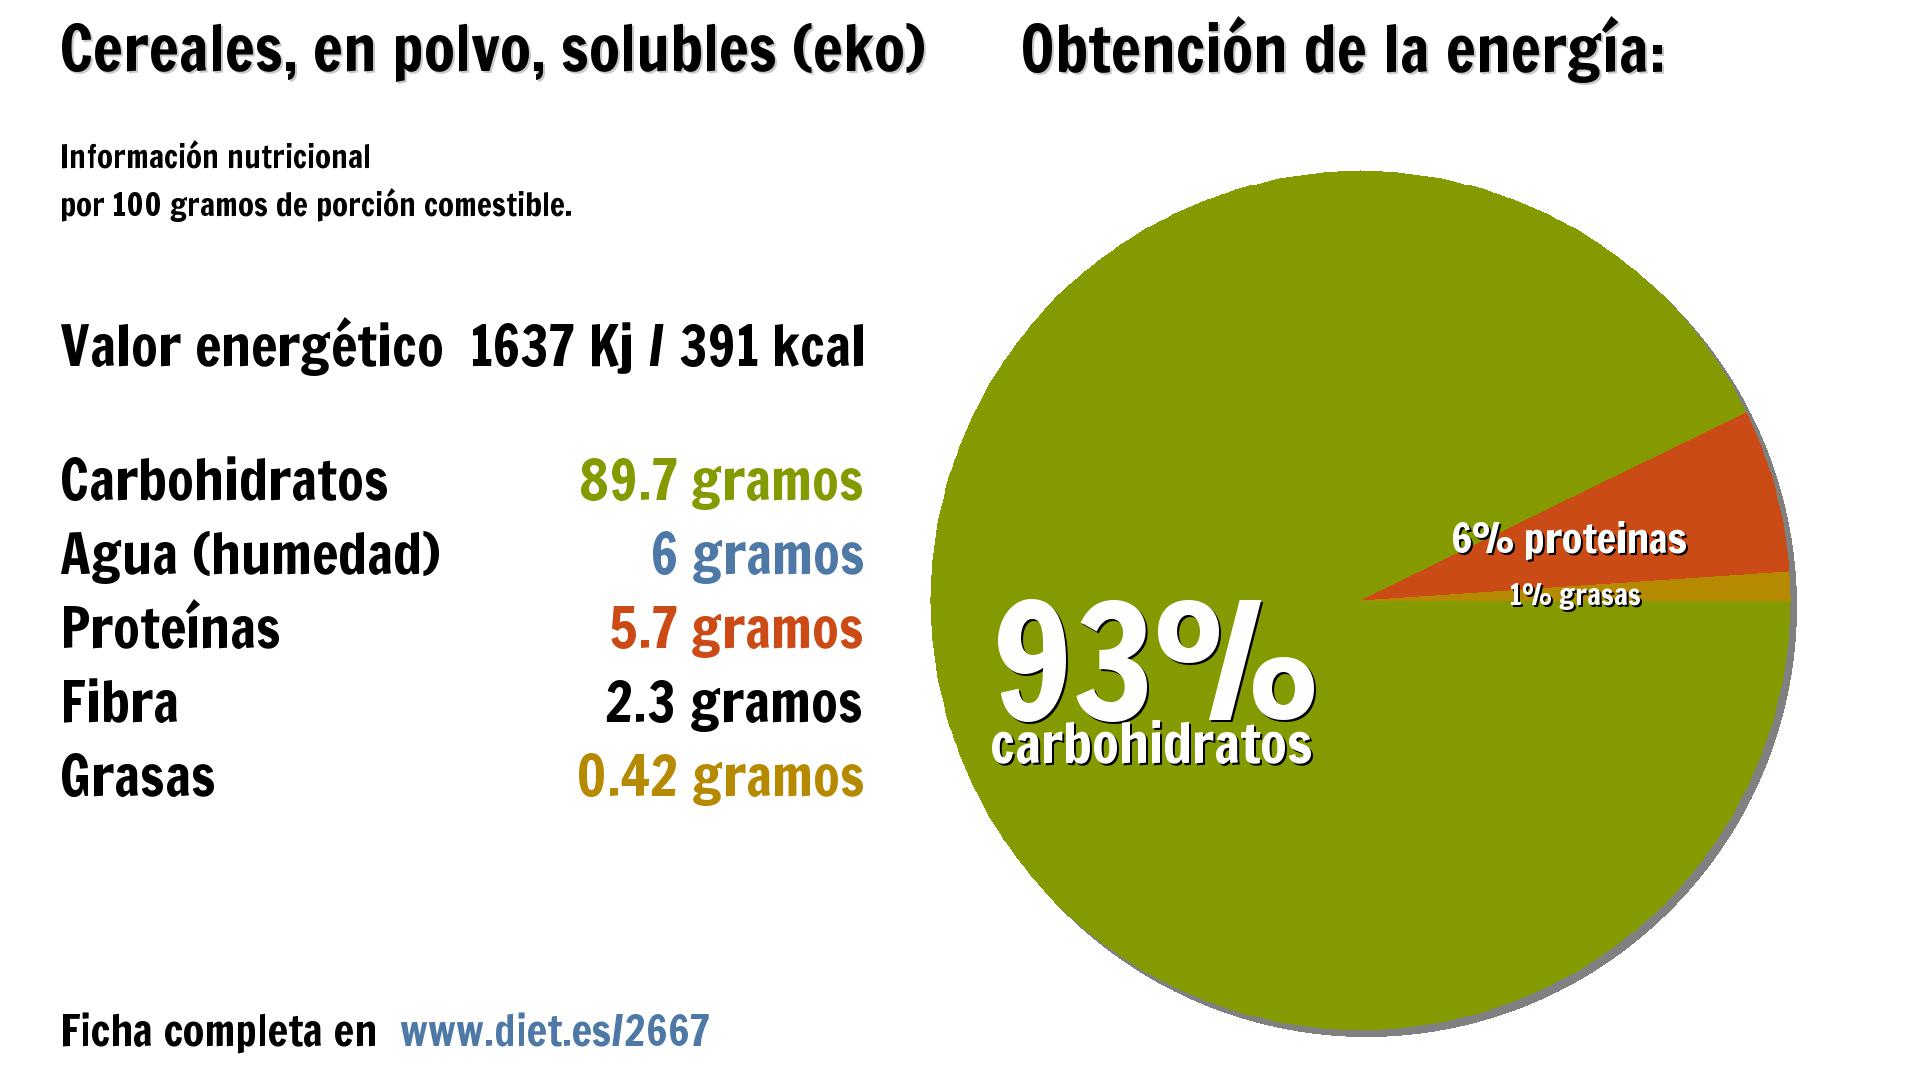 Cereales, en polvo, solubles (eko): energía 1637 Kj, carbohidratos 90 g., agua 6 g., proteínas 6 g. y fibra 2 g.